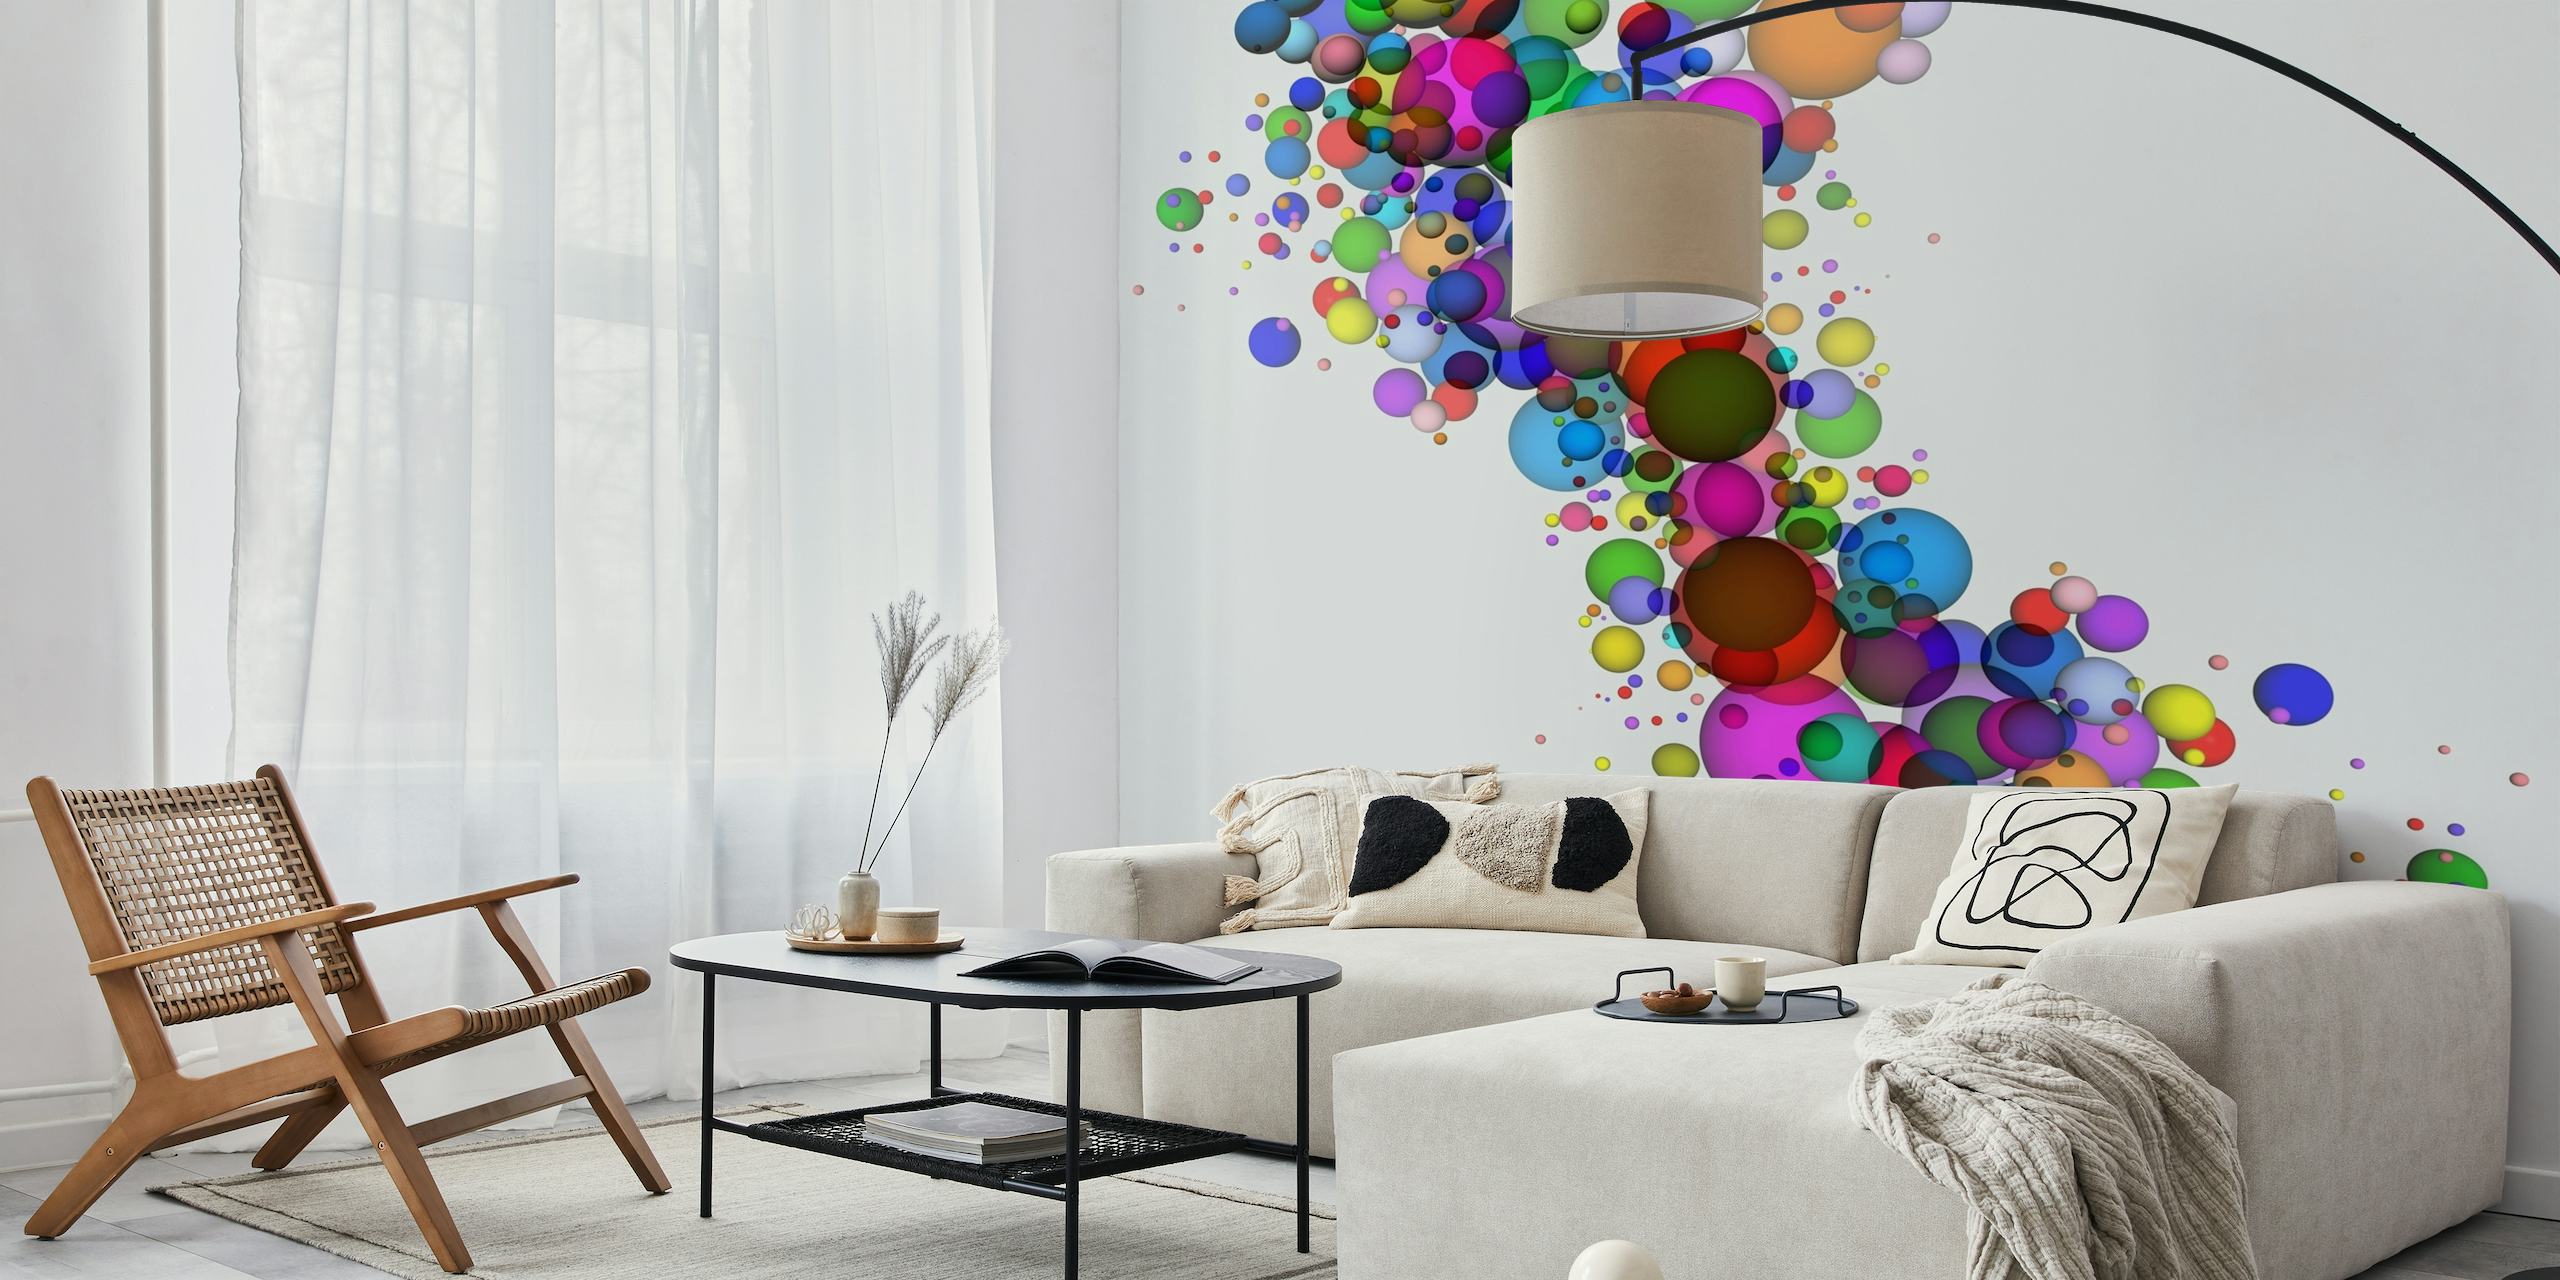 Colored Spheres wallpaper